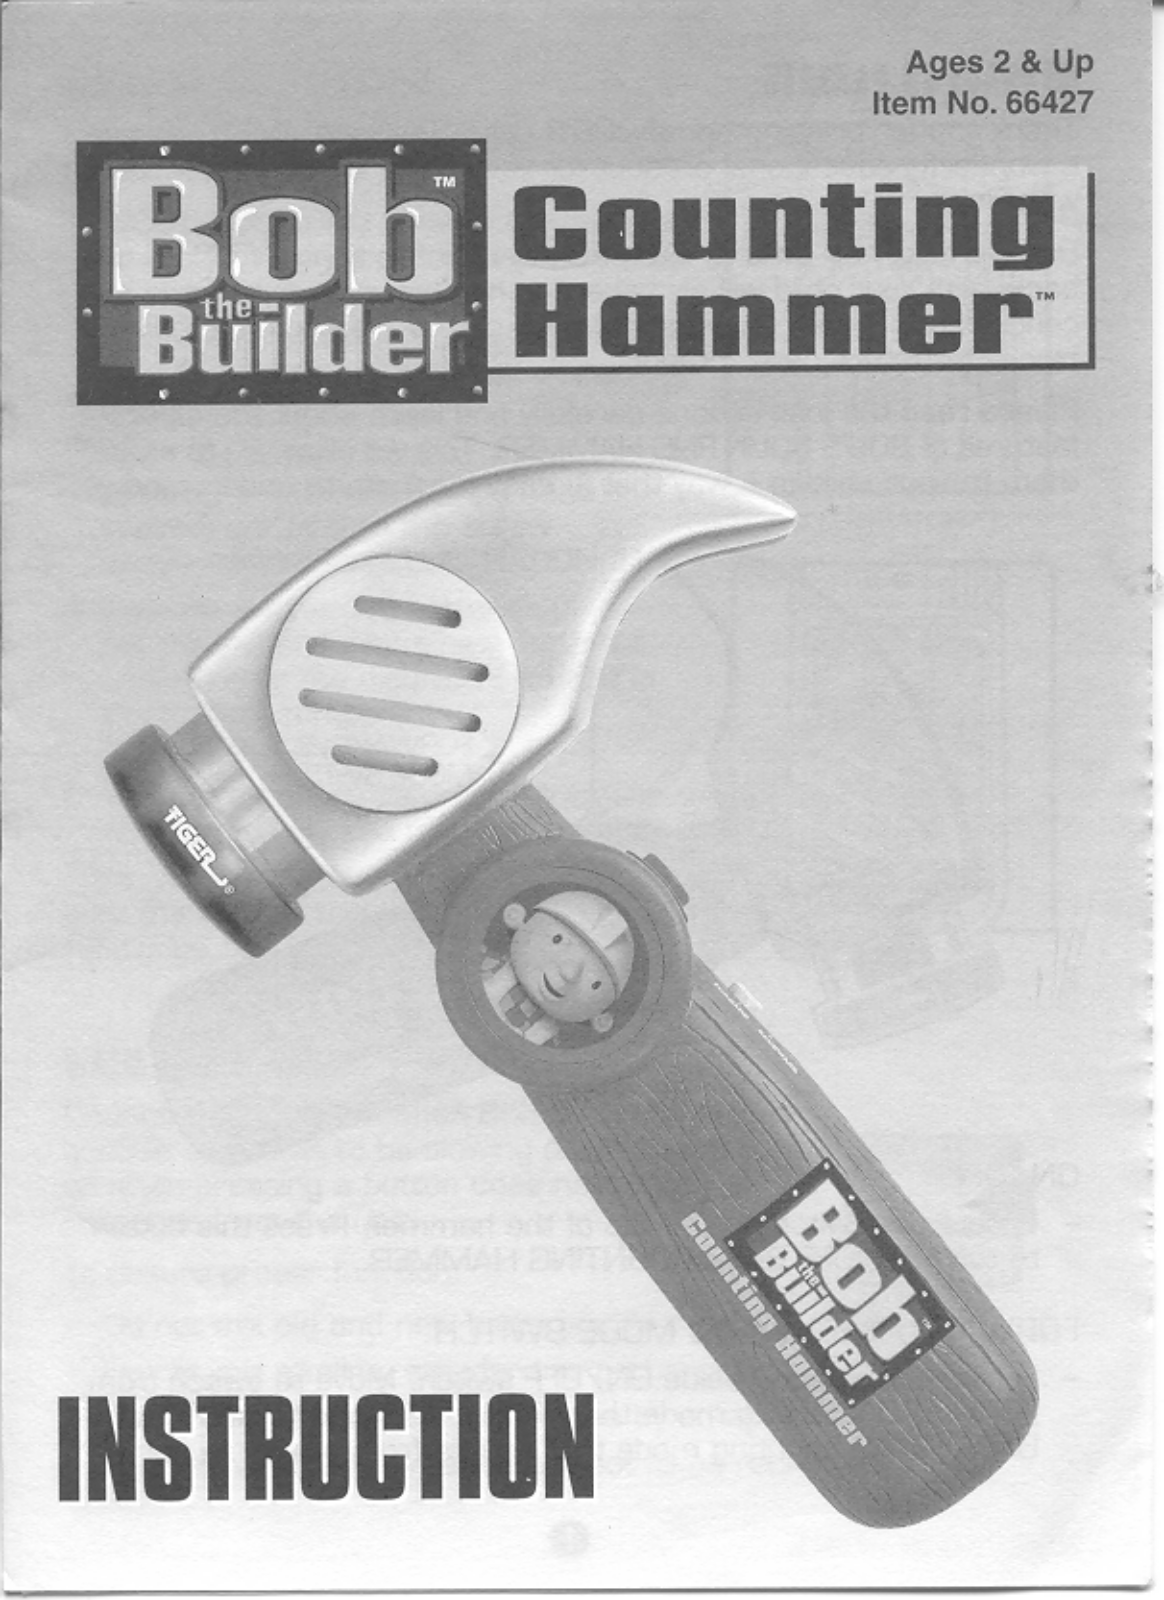 HASBRO Bob the Builder Counting Hammer User Manual